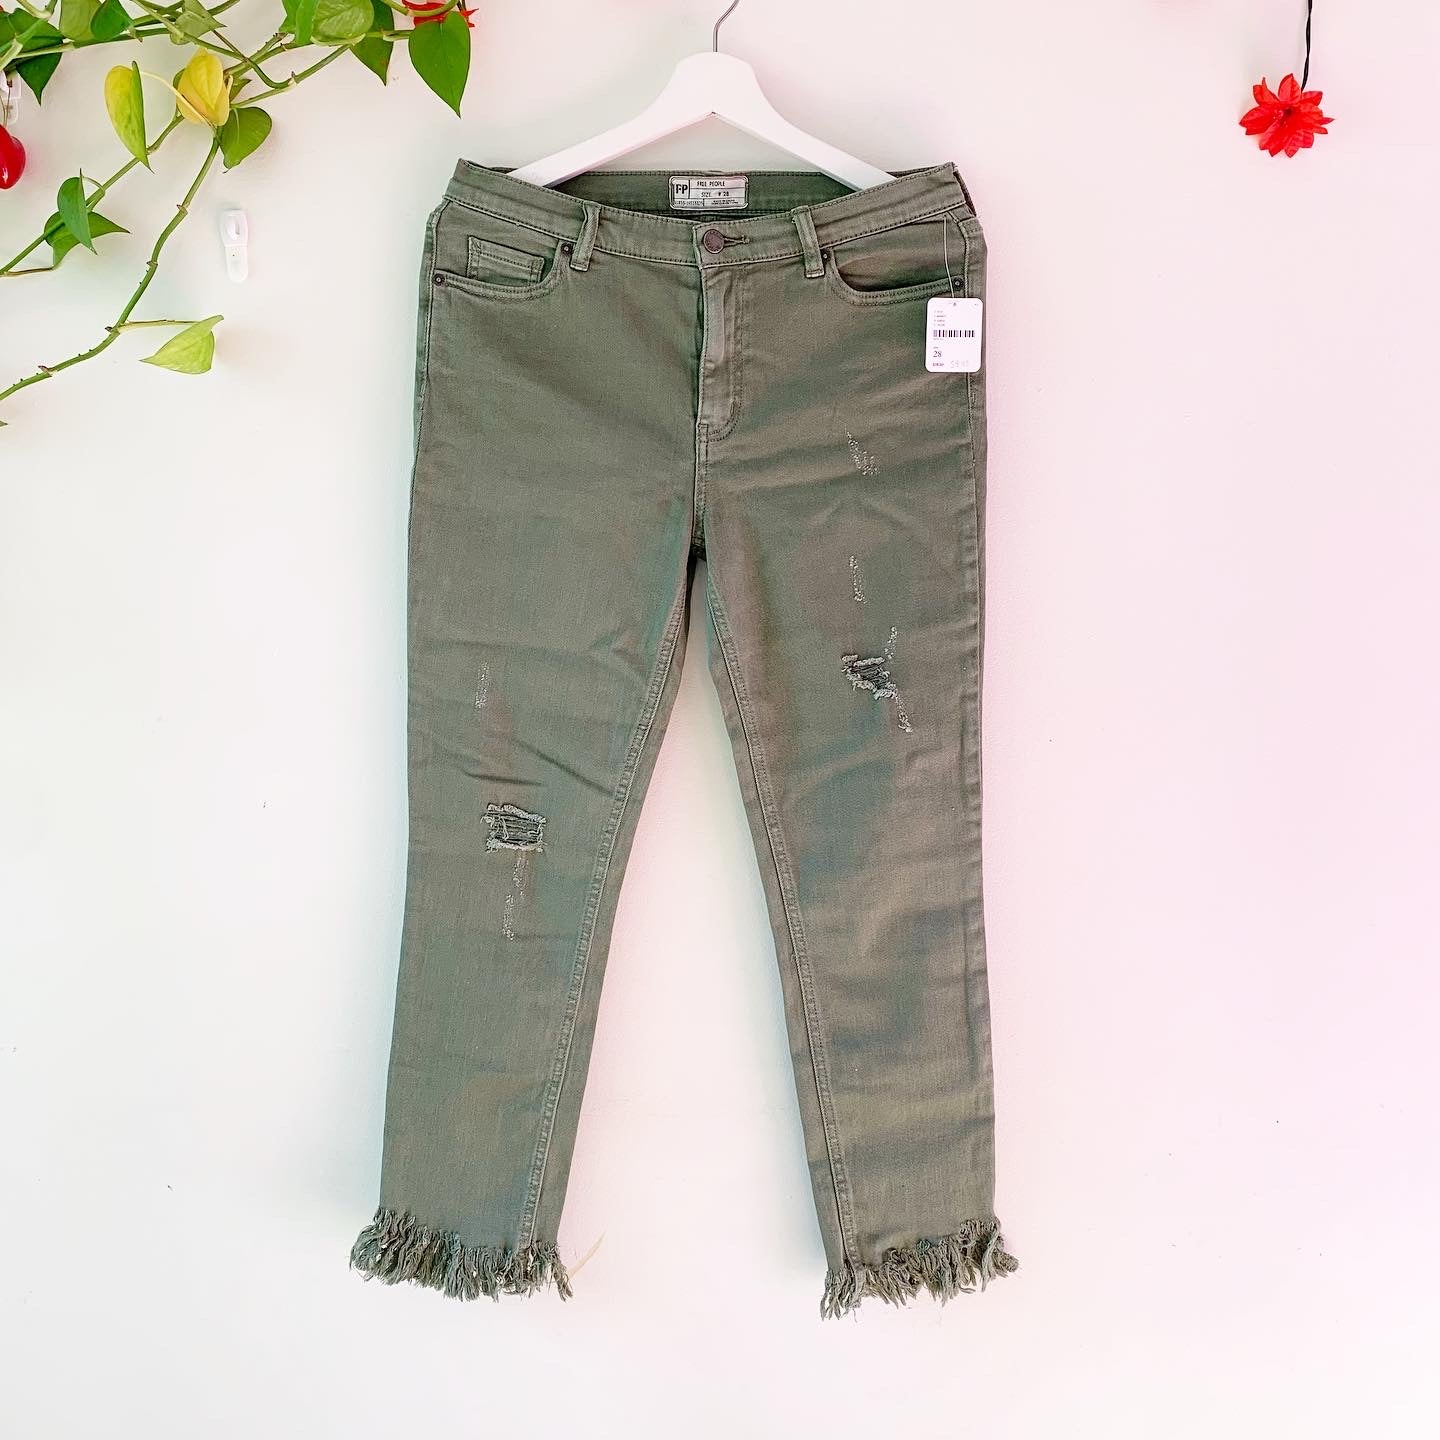 Free People Olive Green Frayed Hem Cropped Skinny Jeans, Size 28